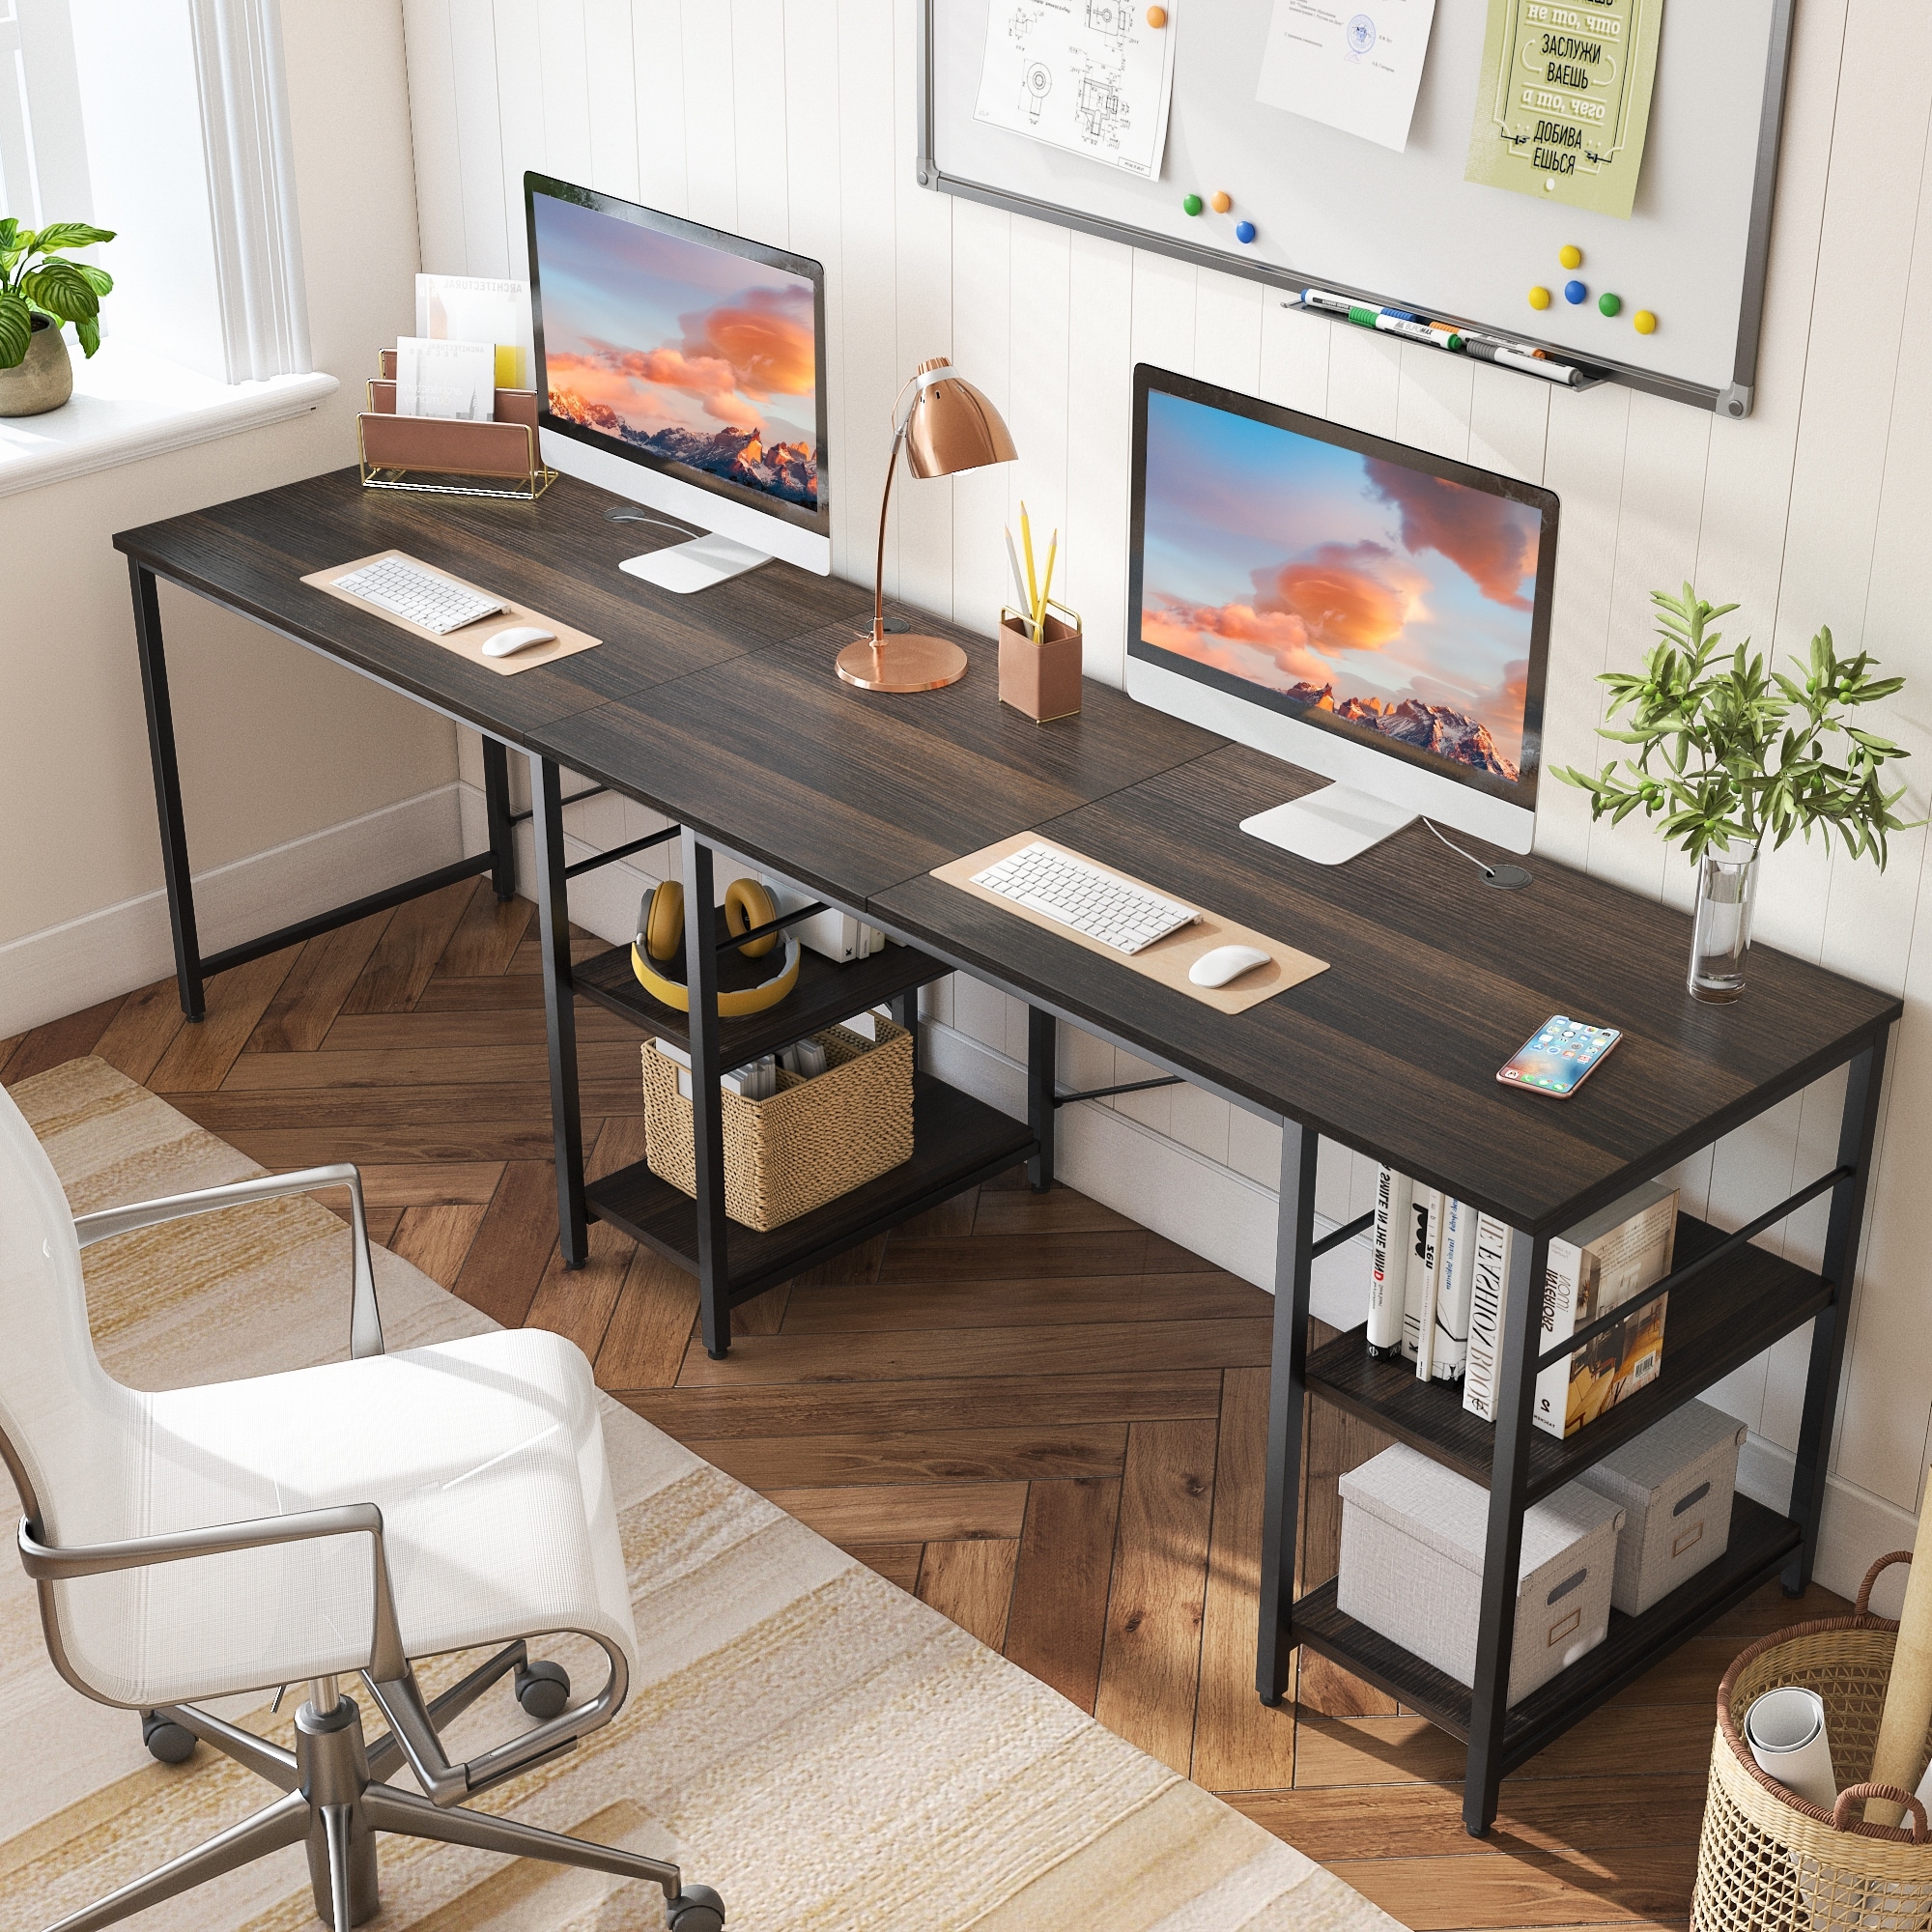 95.2 inch L Shaped Desk with Shelves Home Office Computer Desk - Black